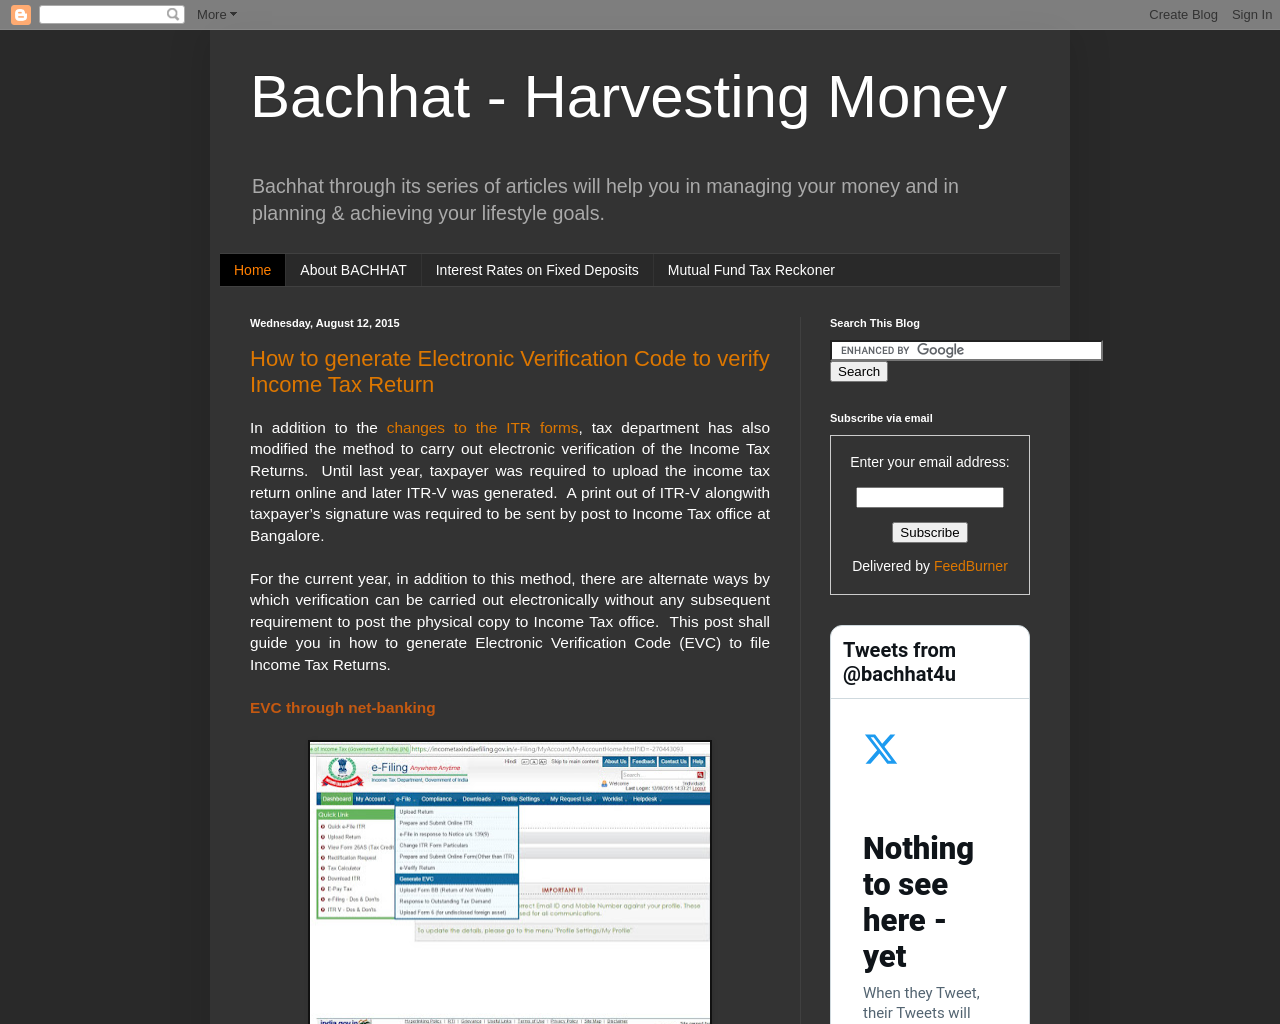 Bachhat - Harvesting Money